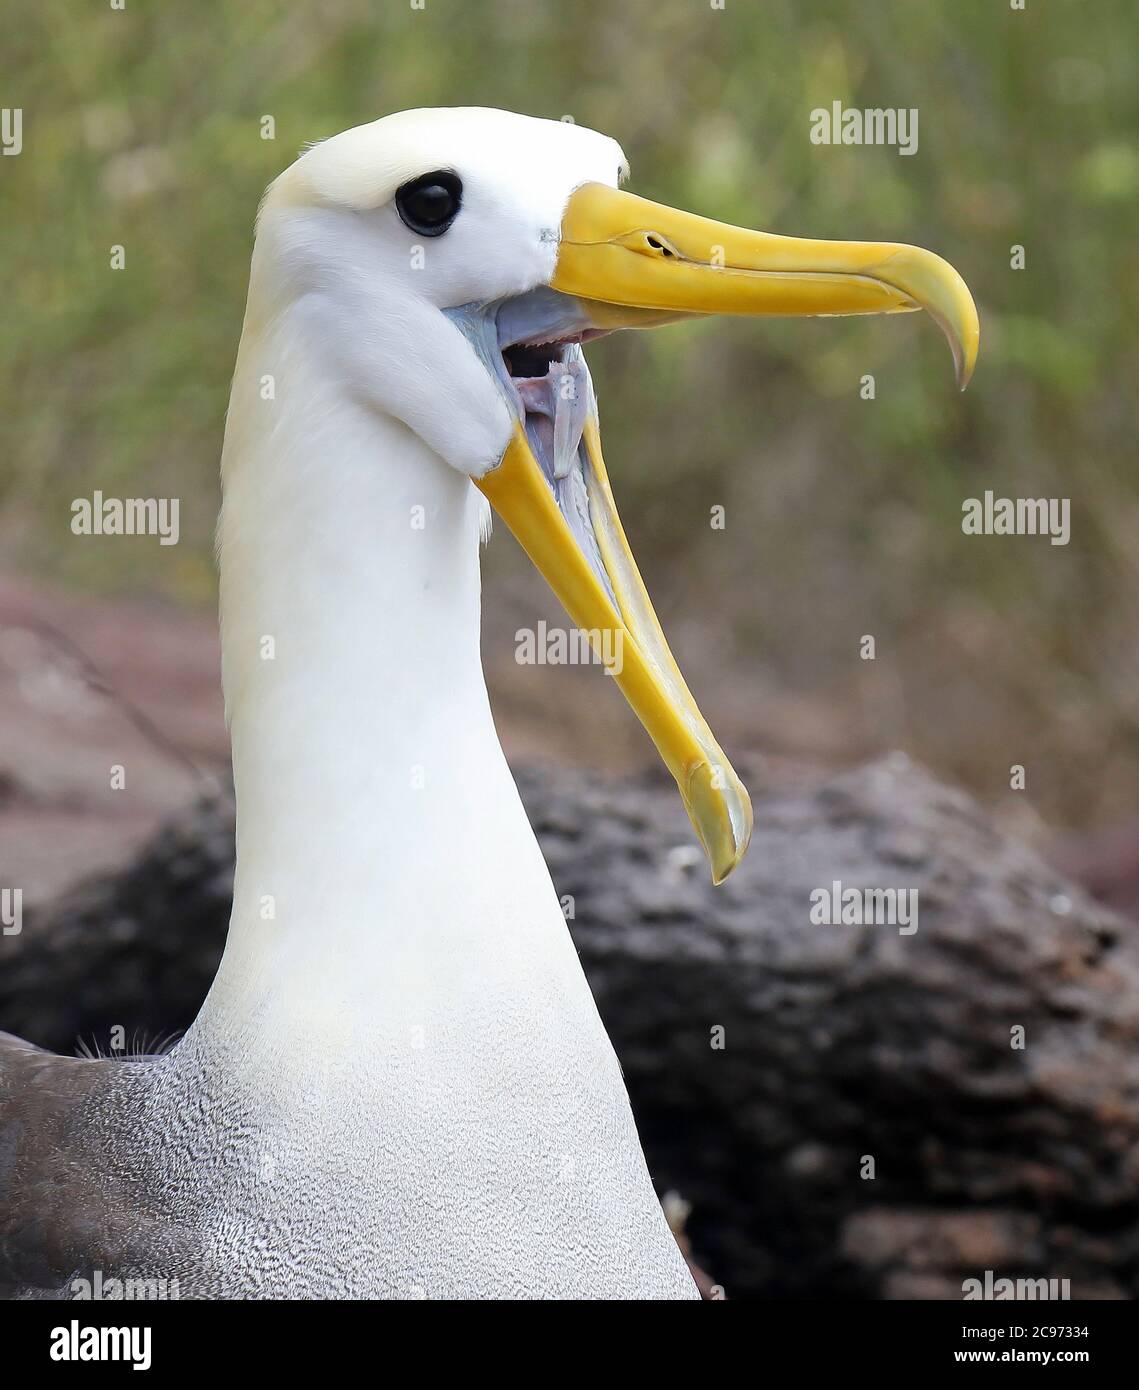 Albatross ondulato, albatross Galapagos (Diomedea irrorata, Phoebastria irrorata), stordimento adulto, Albatross ondulato a rischio critico sull'isola di Espanola, Ecuador, Isole Galapagos, Espanola Foto Stock